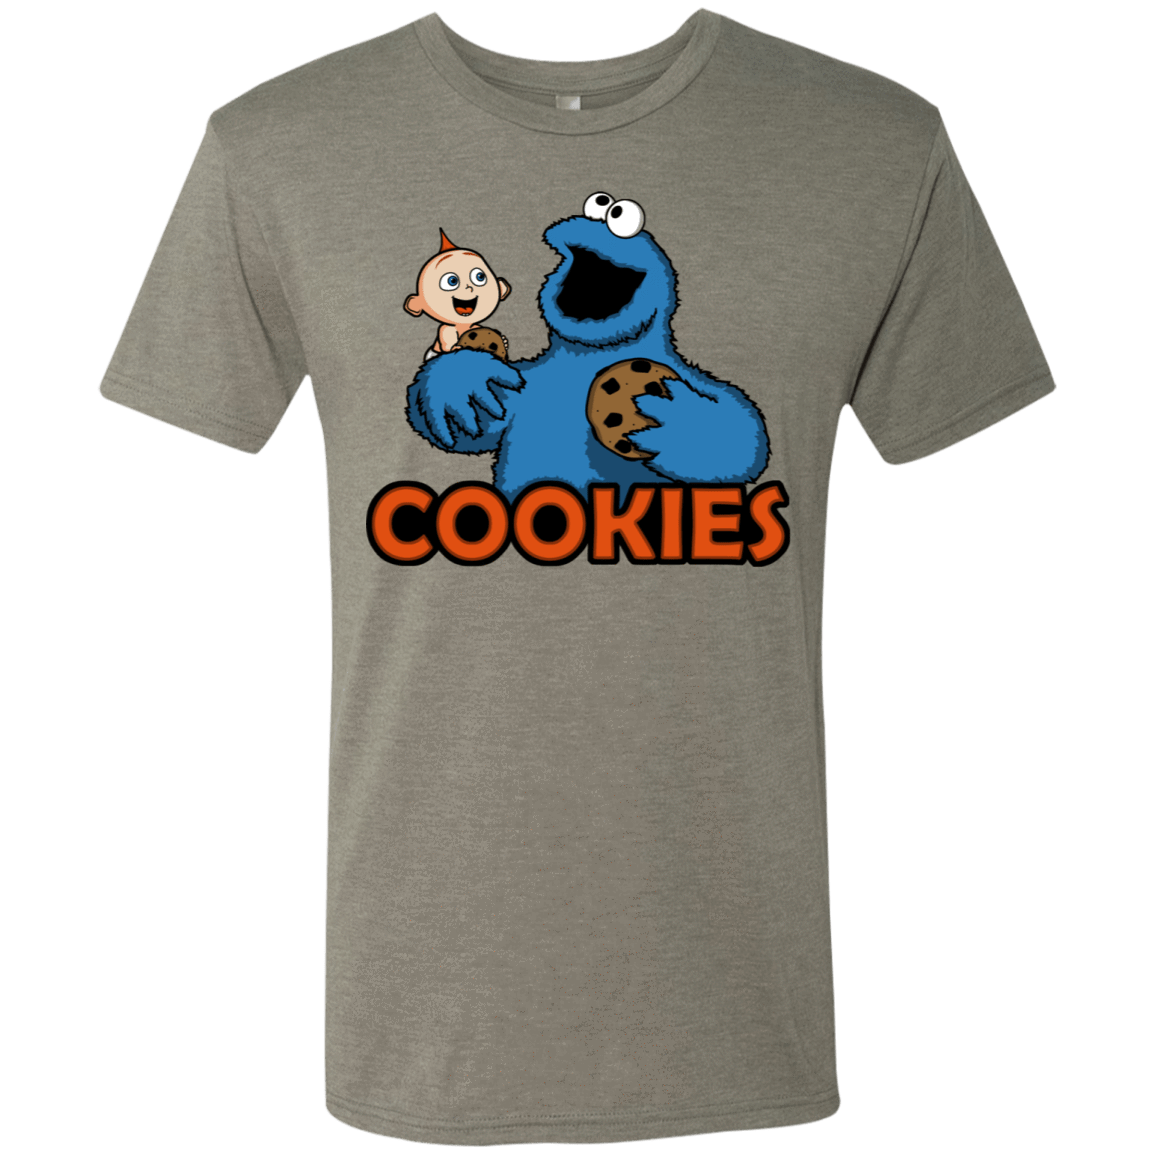 T-Shirts Venetian Grey / S Cookies Men's Triblend T-Shirt